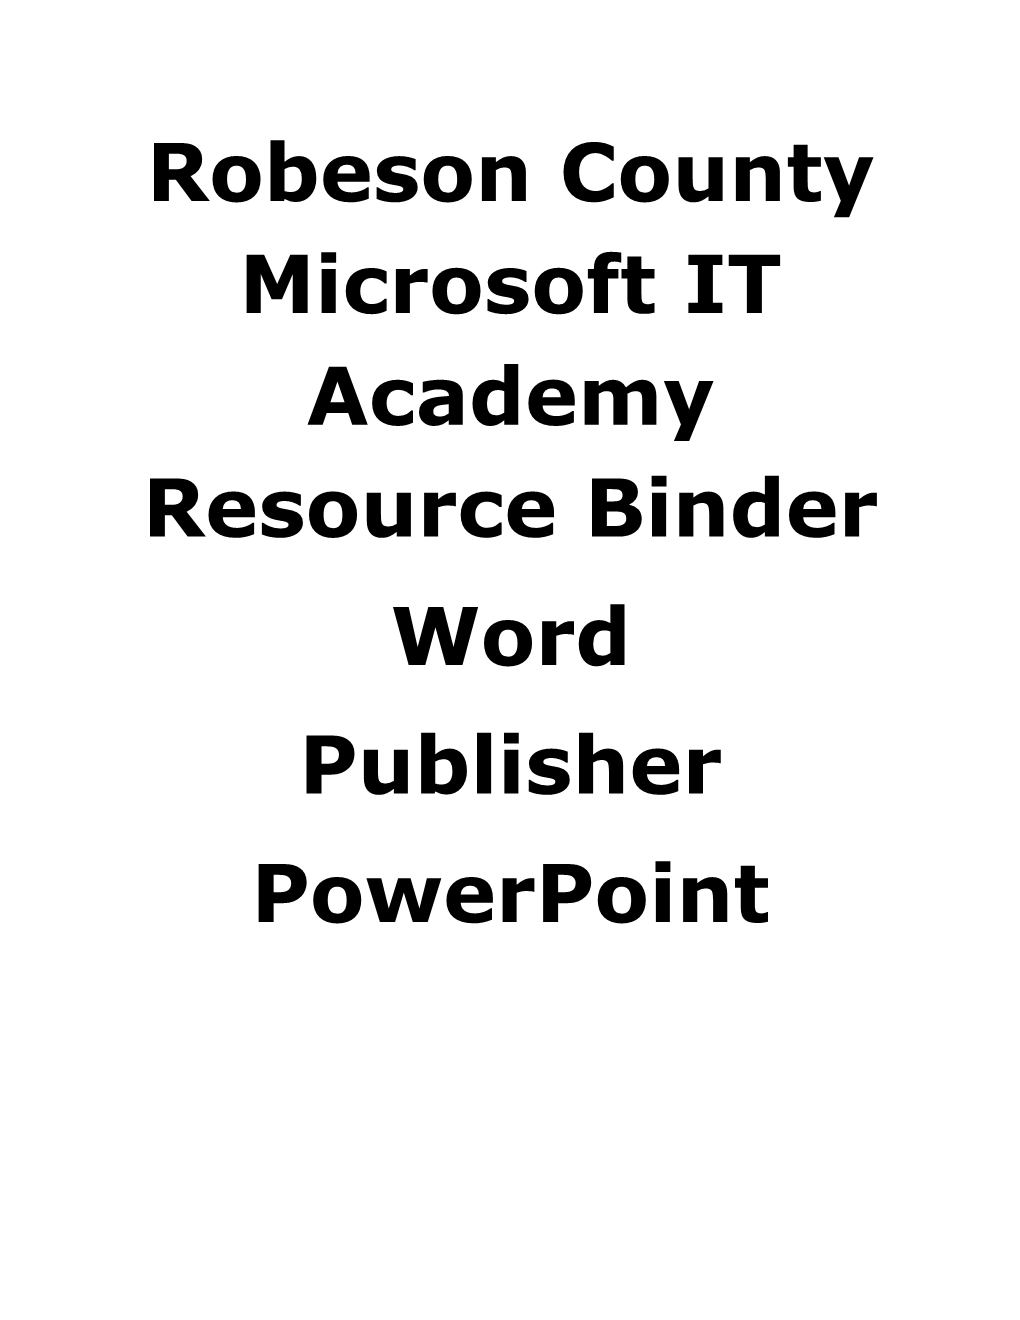 Robeson County Microsoft IT Academy Resource Binder